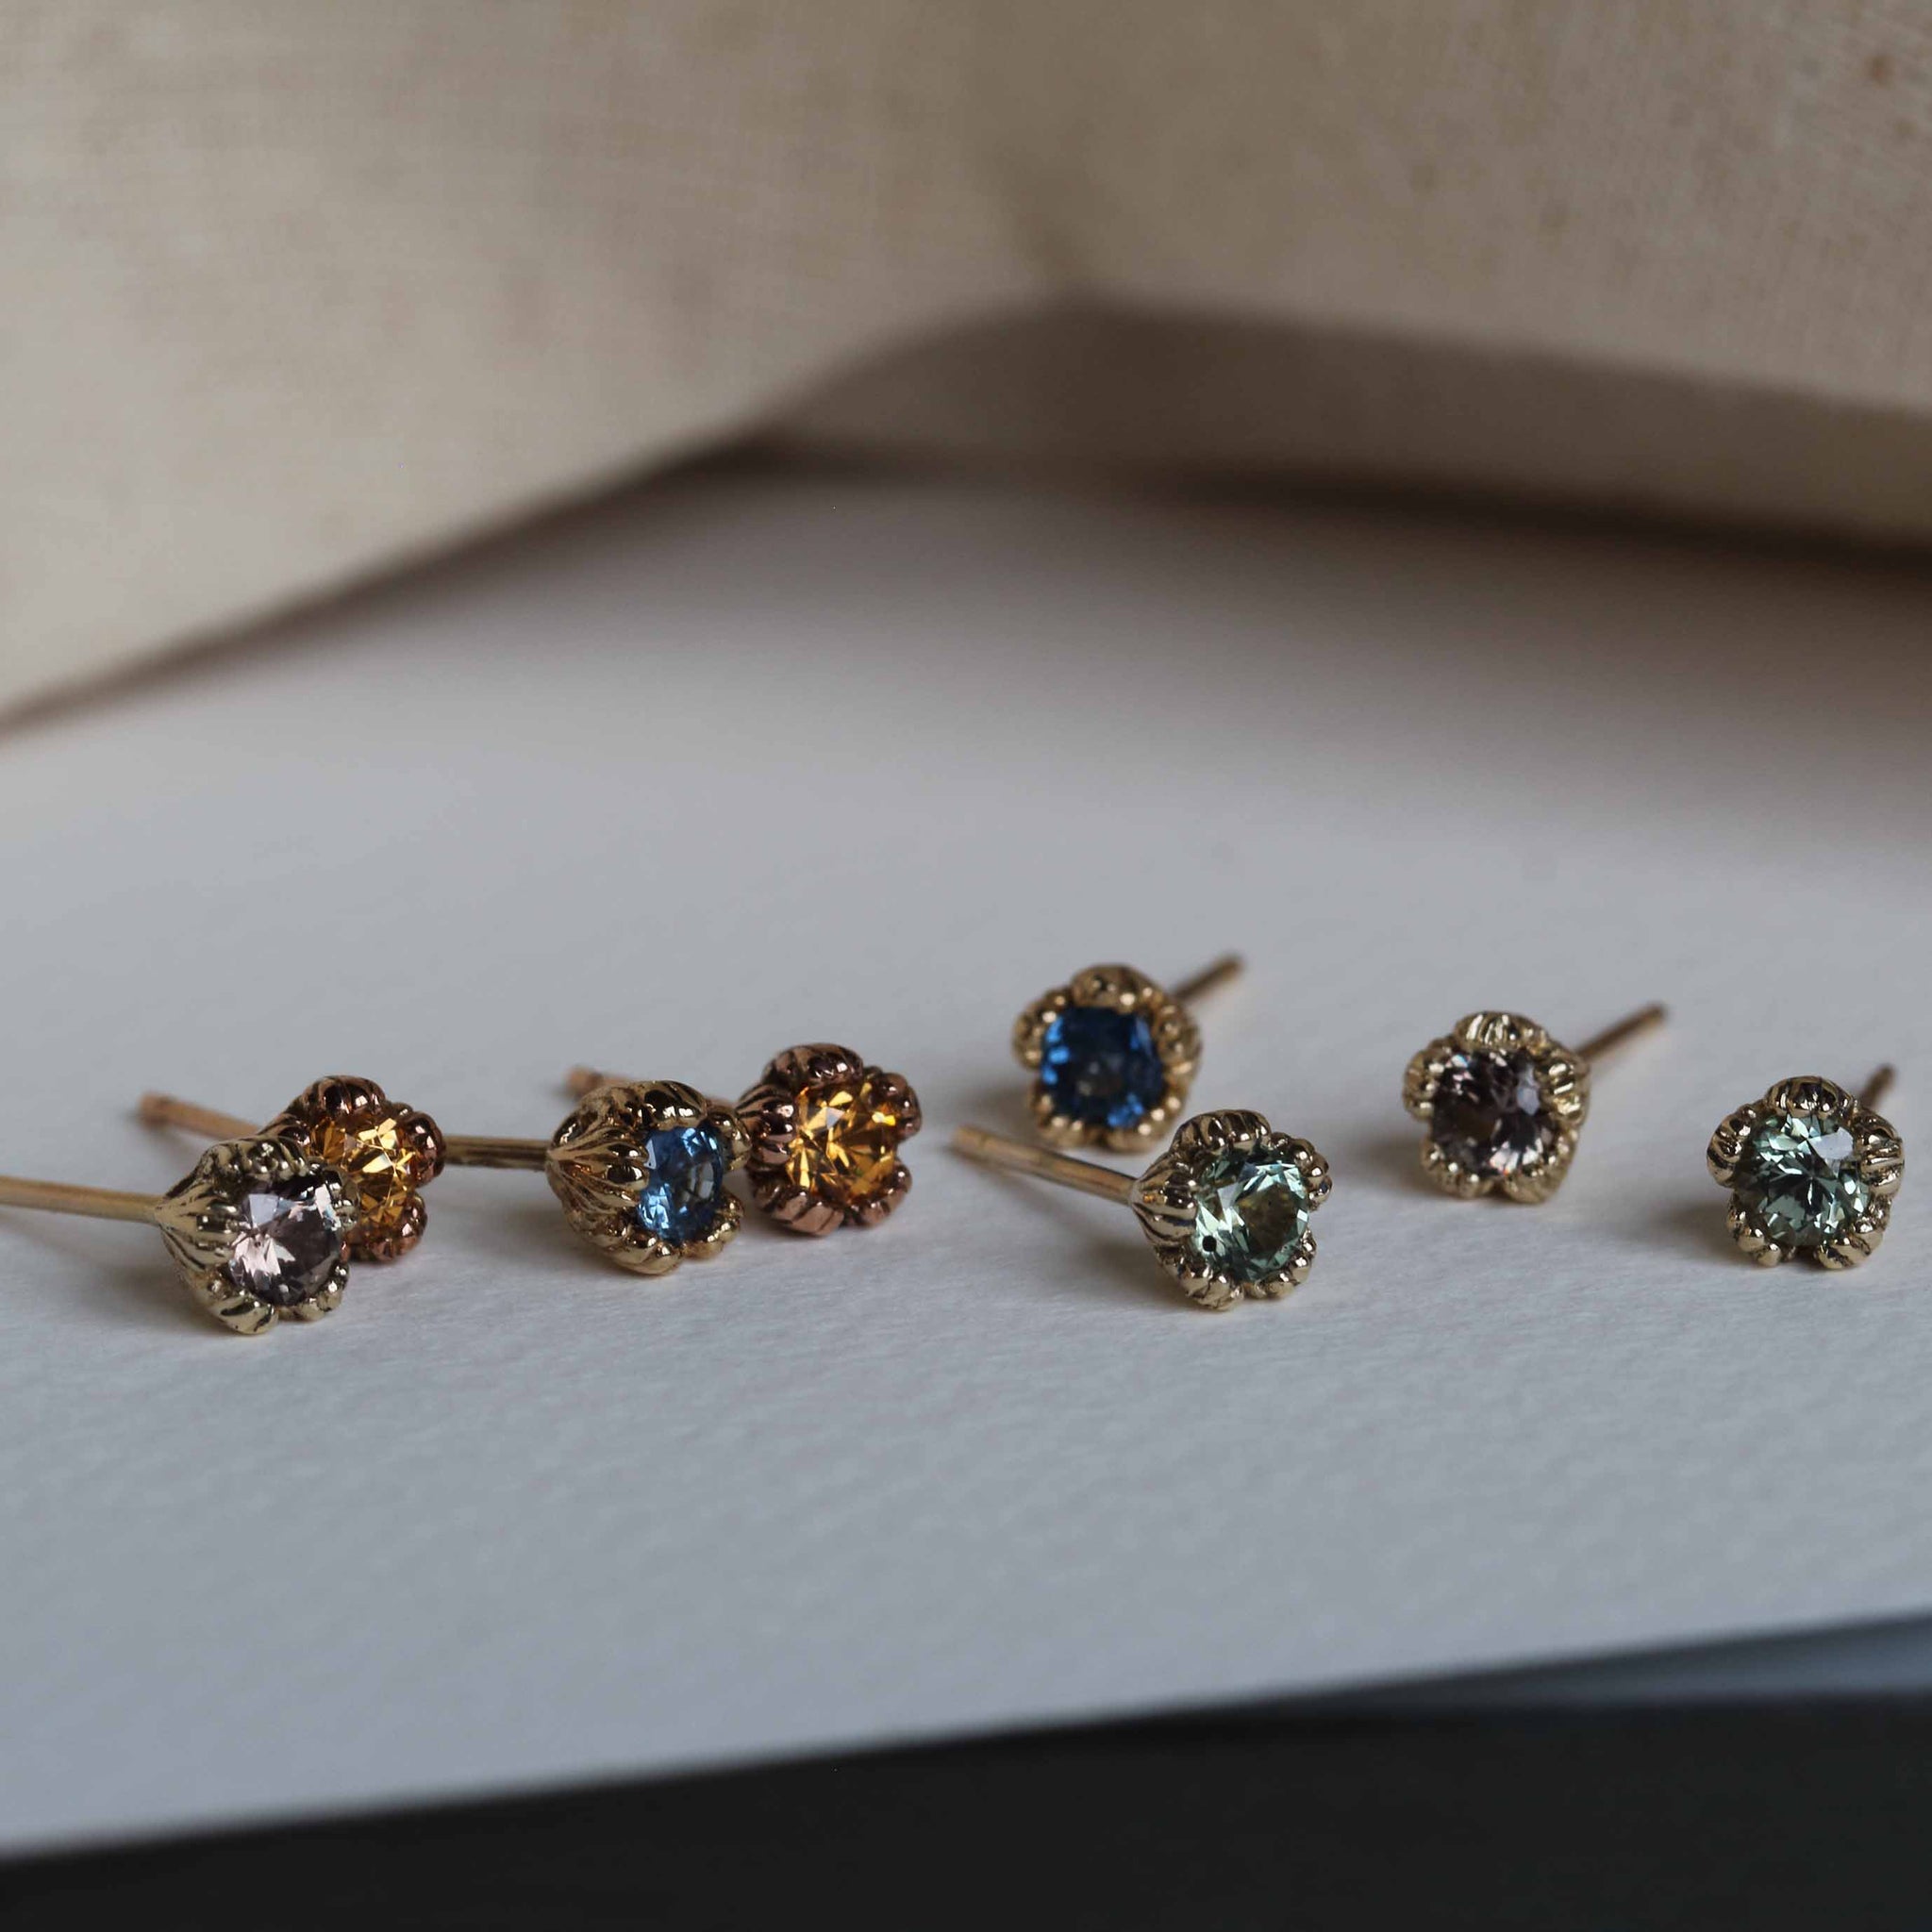 A selection of gemstone earrings.